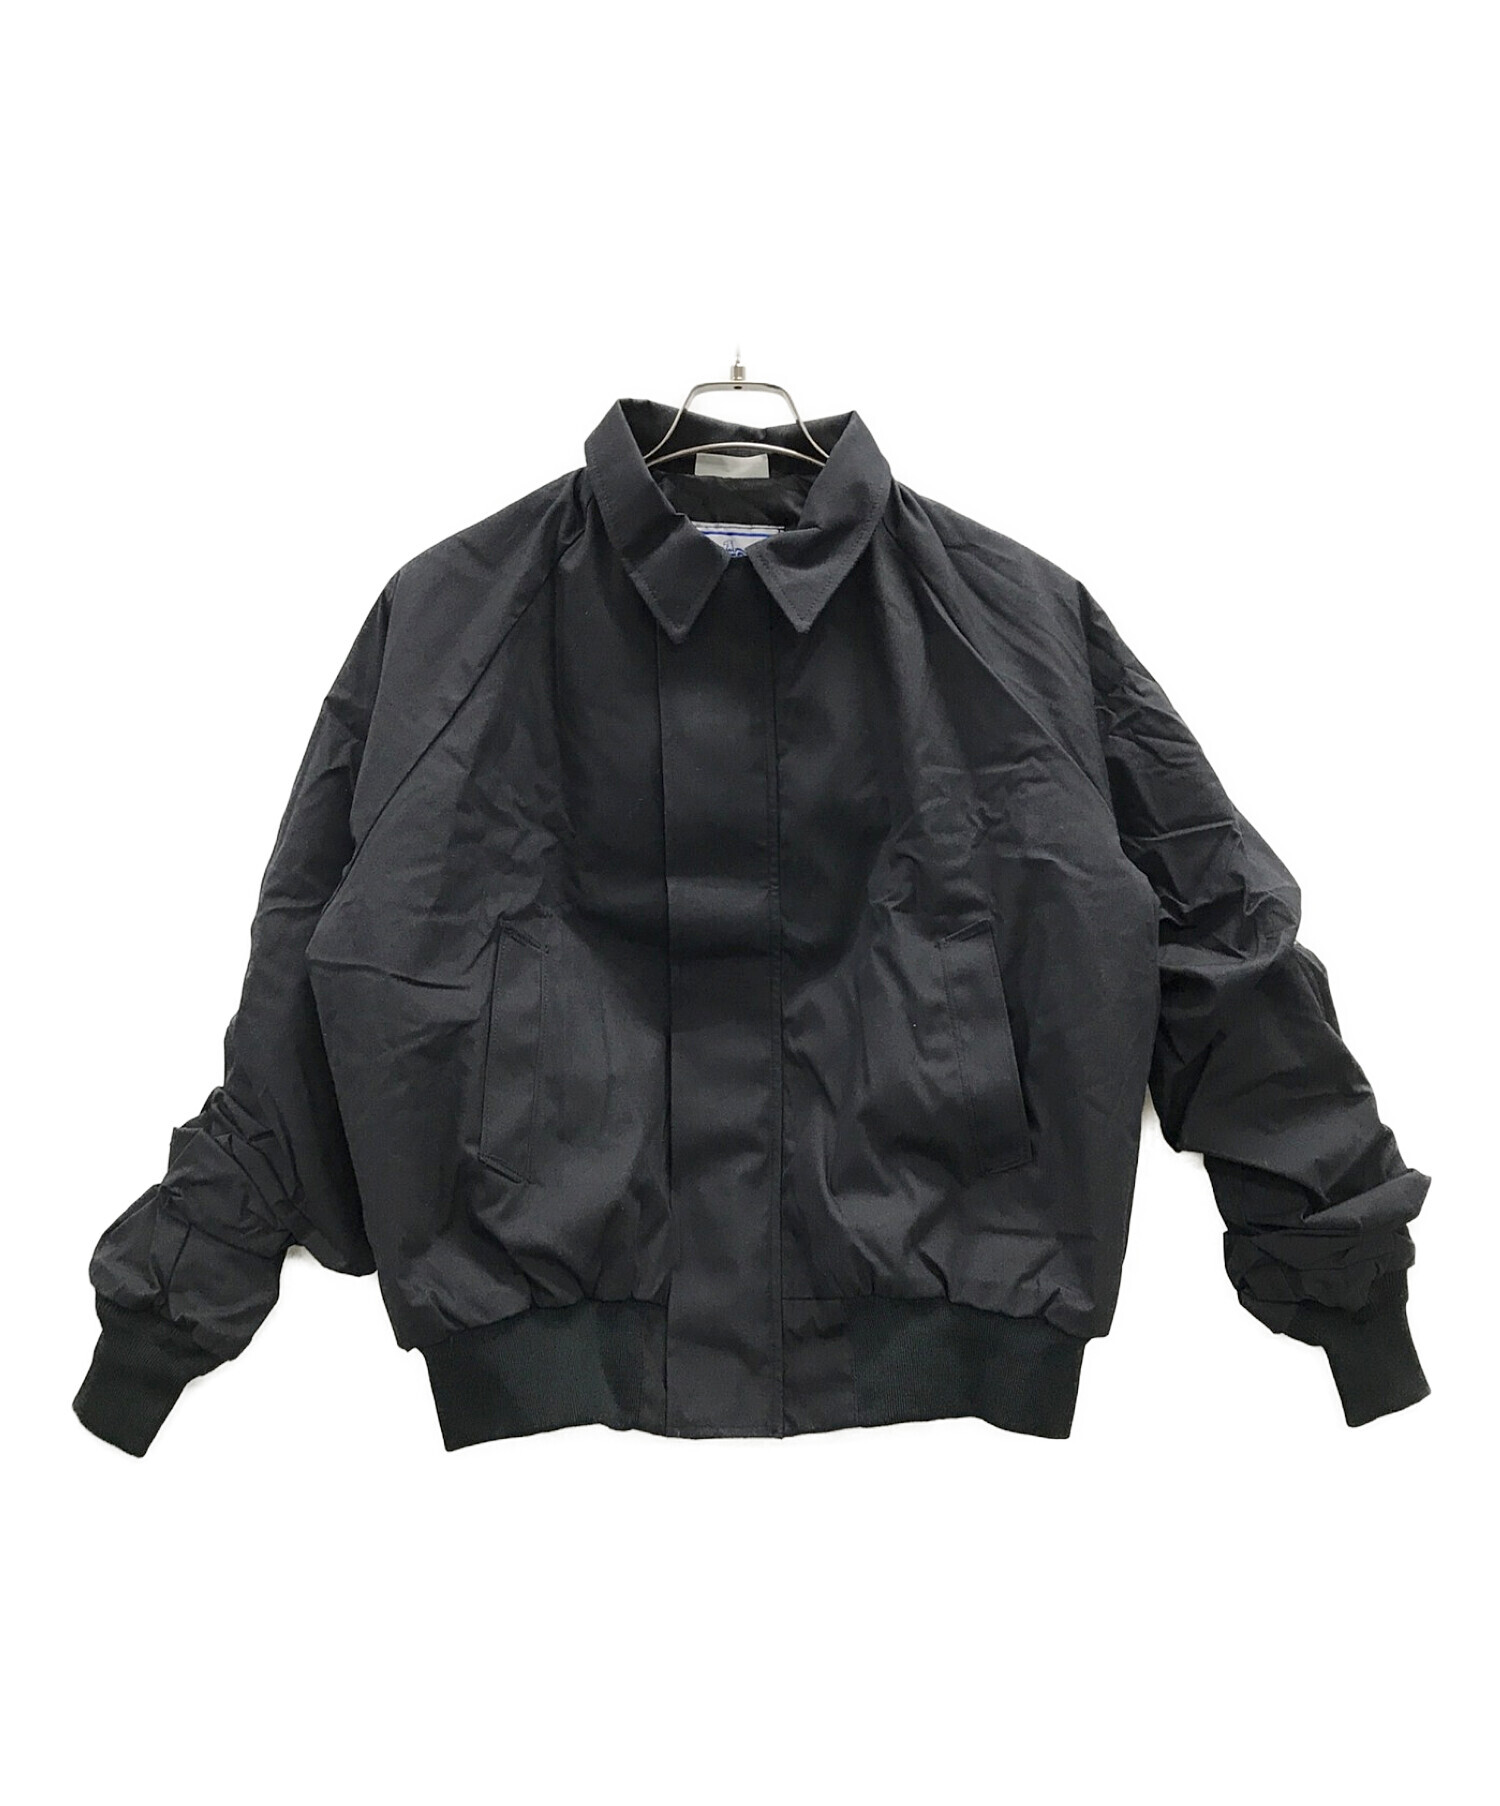 dscp quarterdeck collection UTILITY JACKET (ジャケット) 中綿ジャケット ブラック  サイズ:SMALL-XXSHORT 未使用品